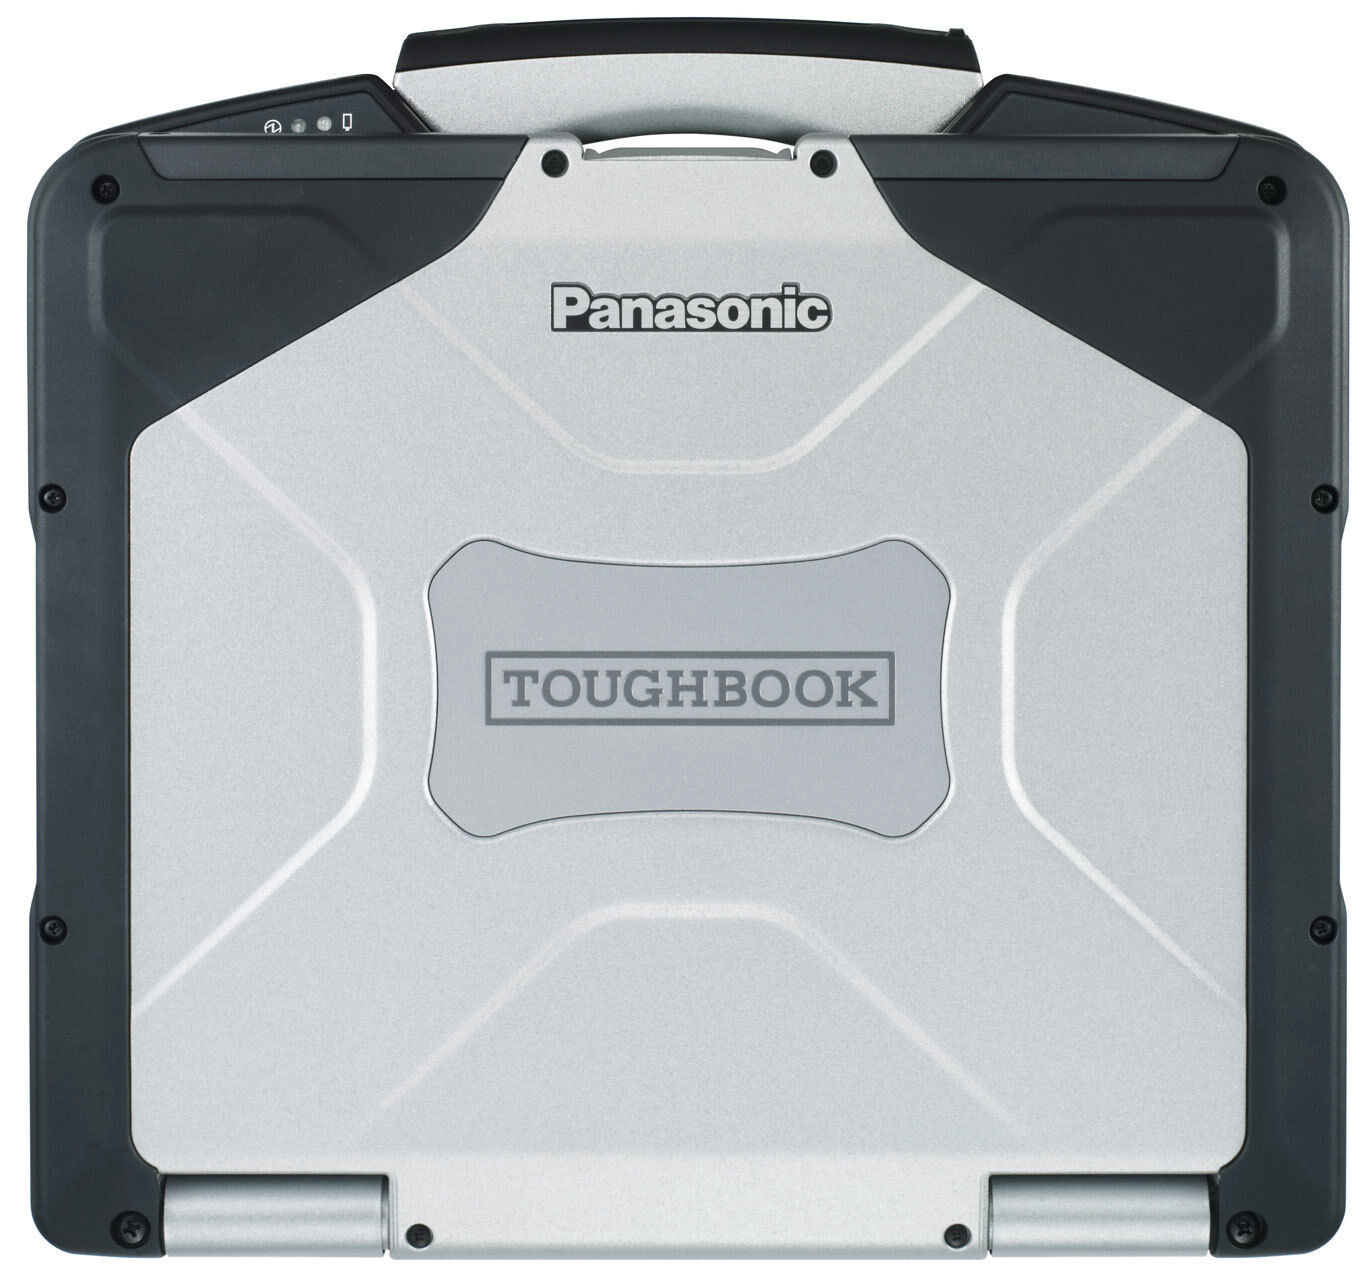 Custom Build Panasonic Toughbook 31 Core i3 Rugged Laptop Military Touchscreen